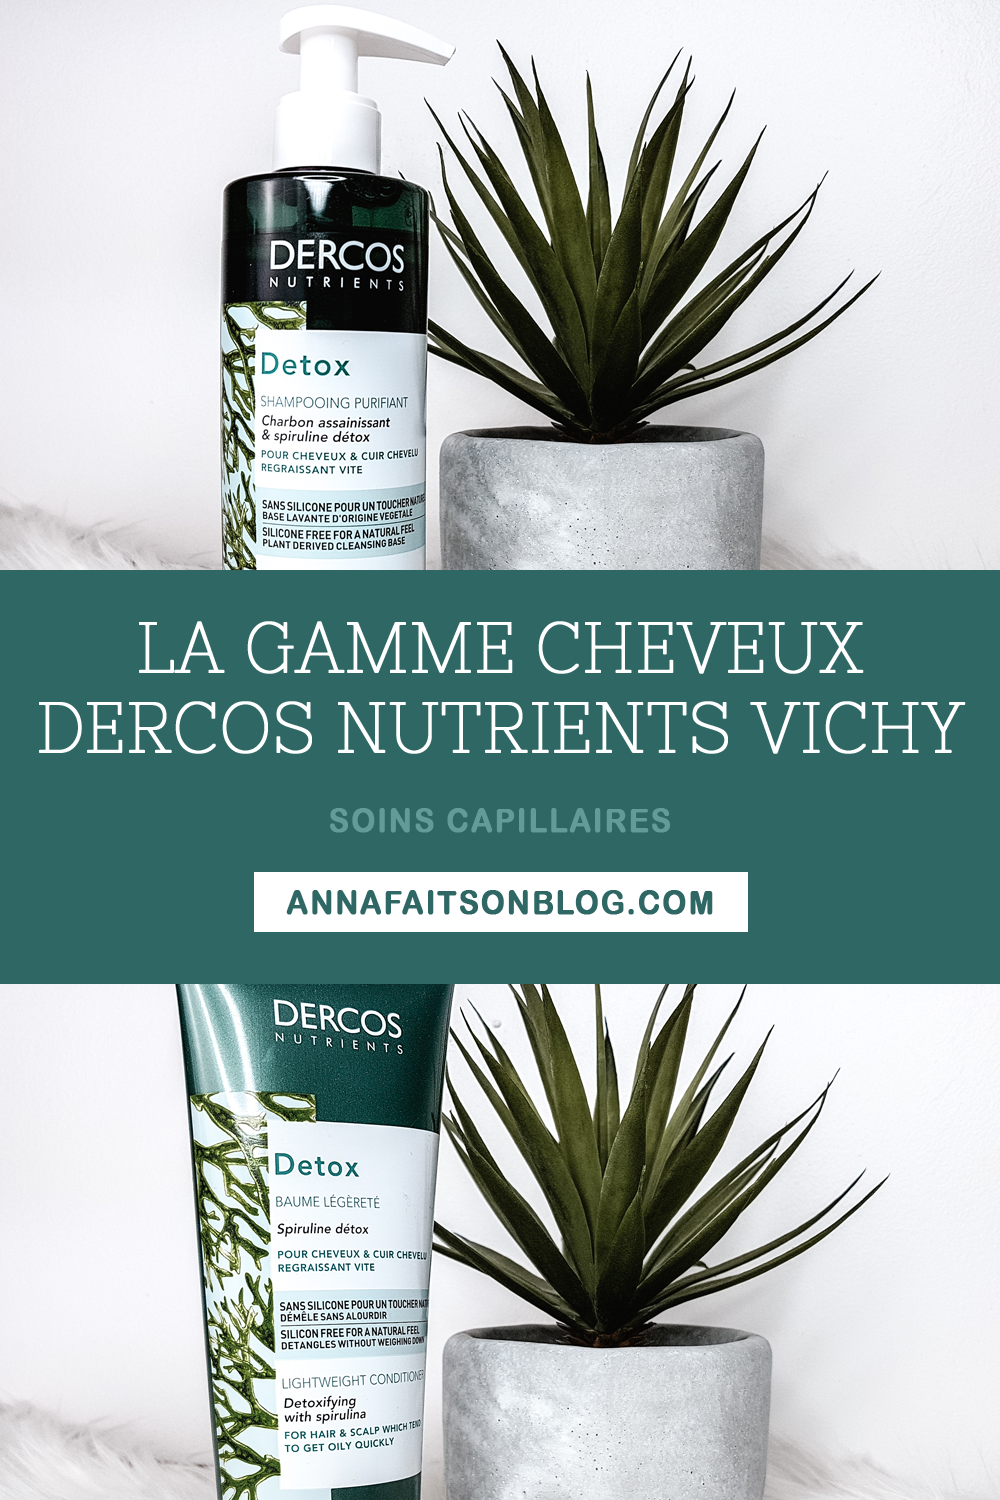 Gamme cheveux Dercos Nutrients Vichy